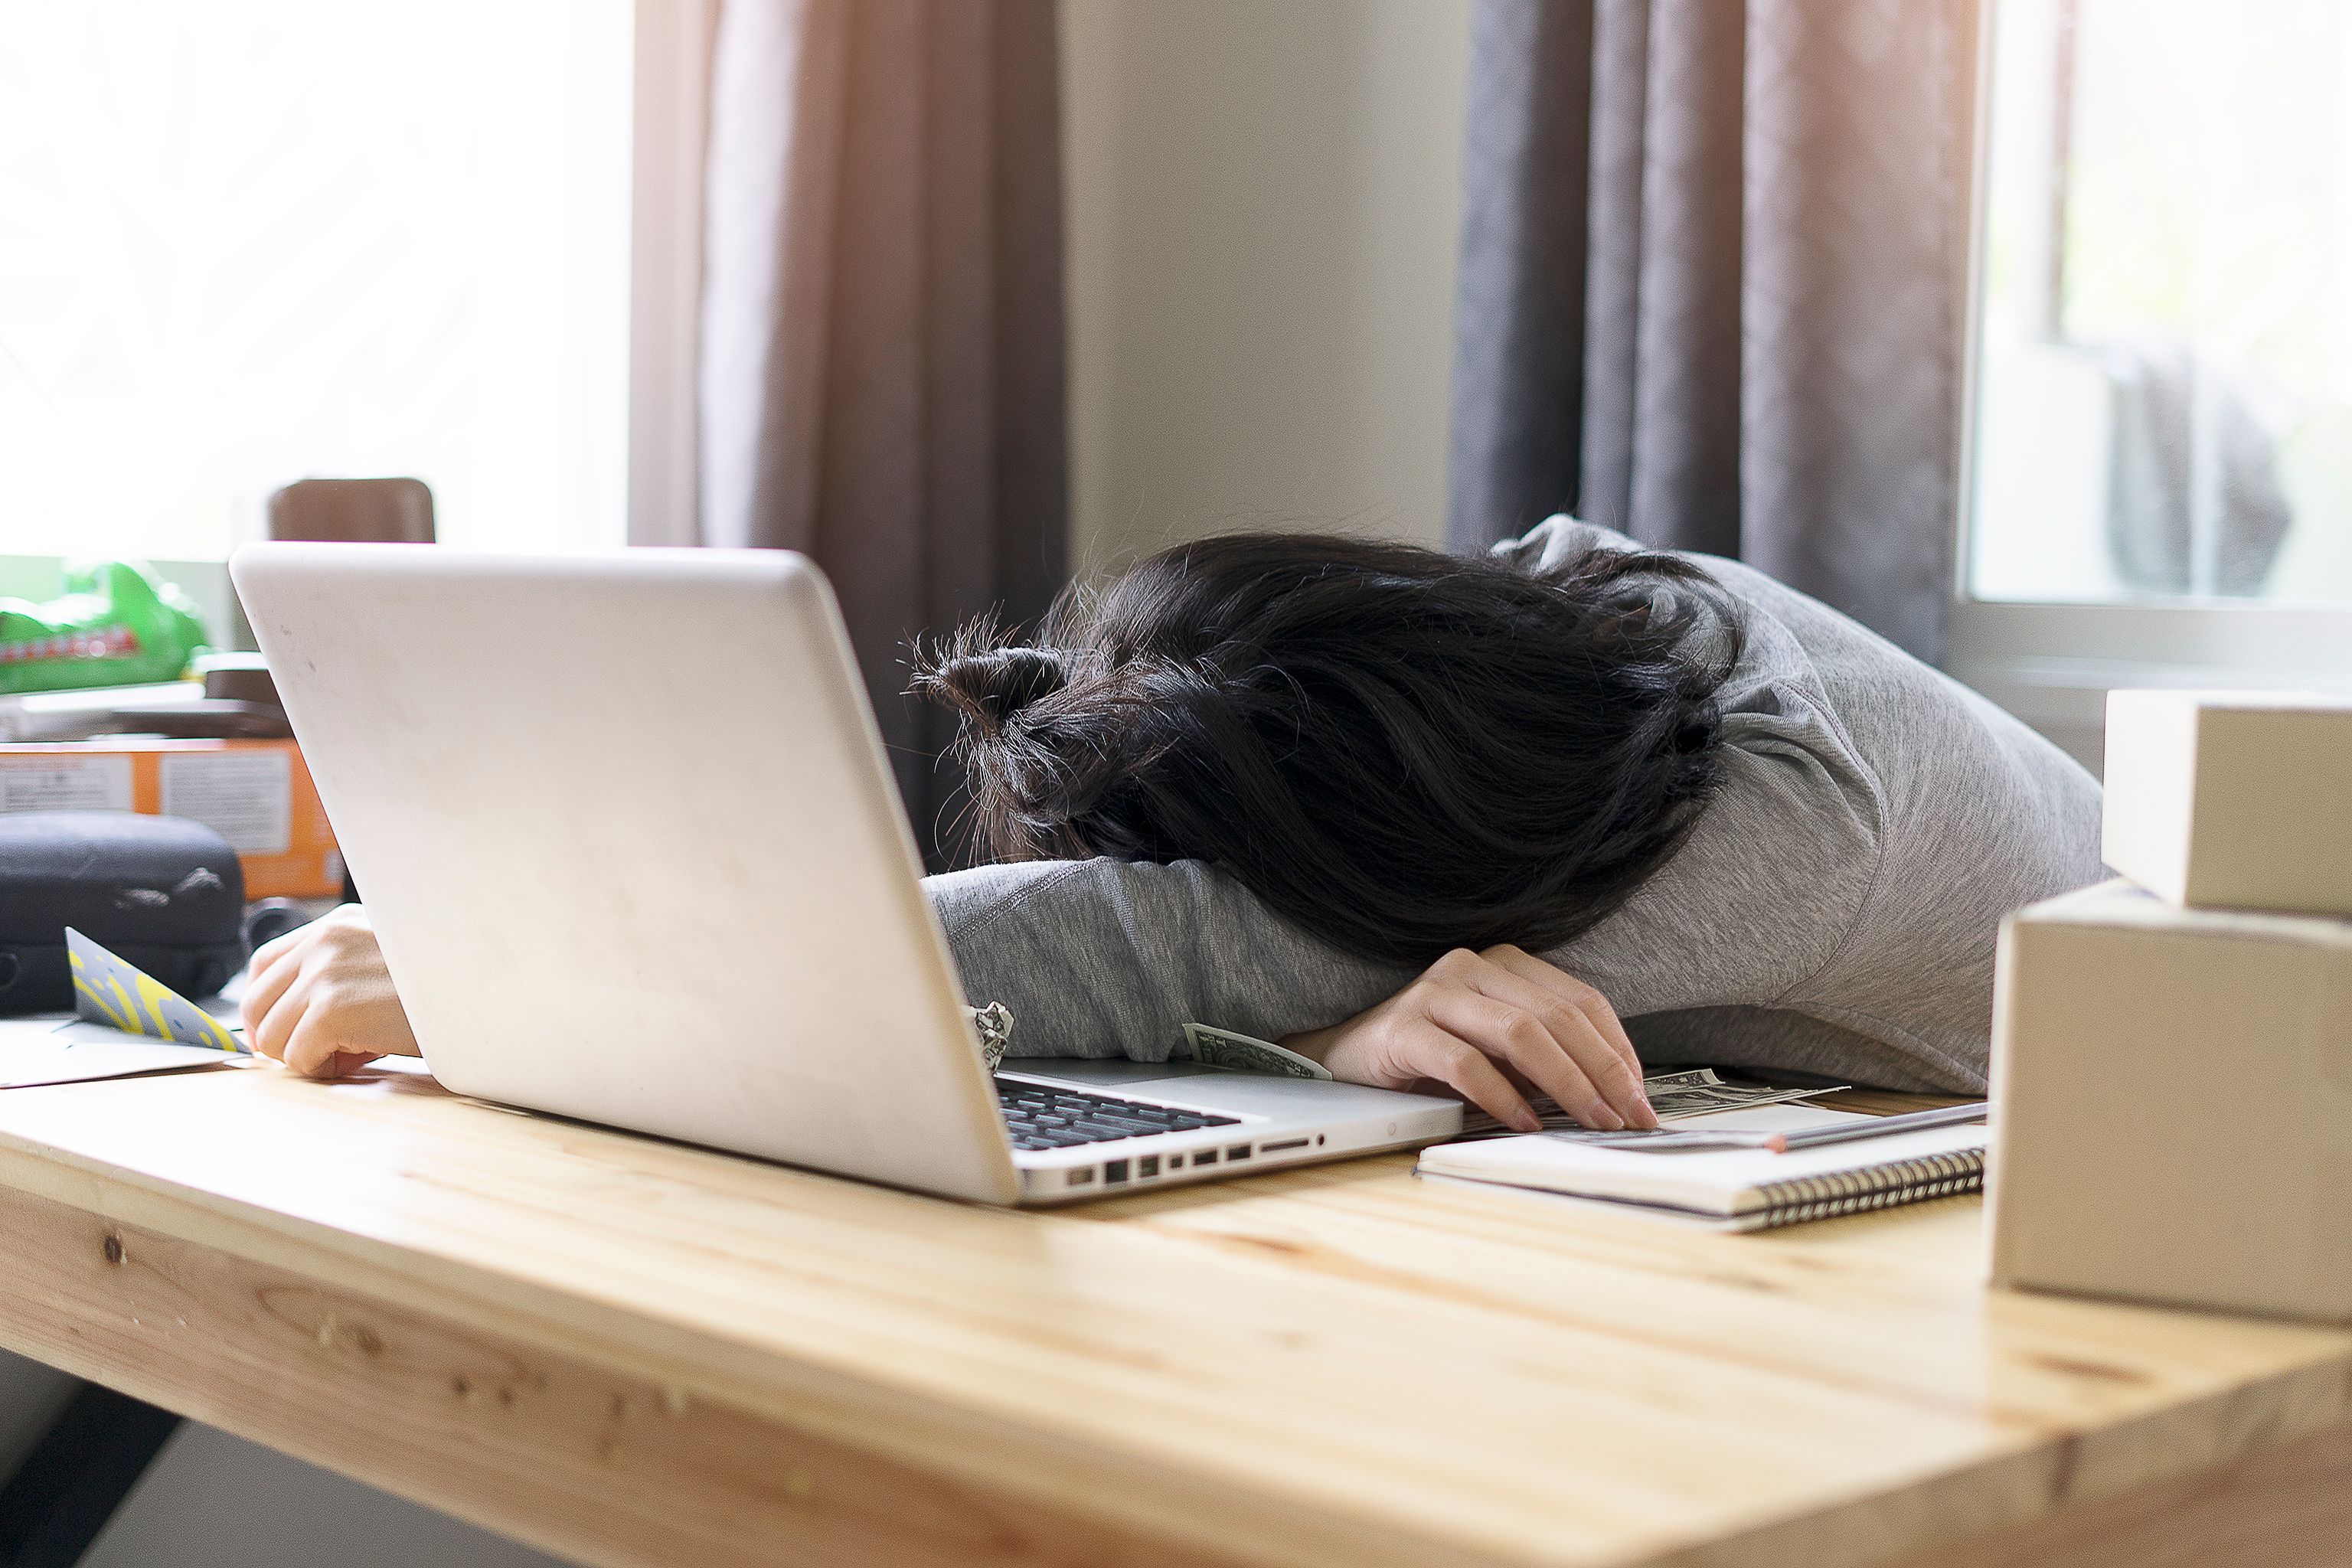 Weekend catch-up sleep won't fix the effects of sleep deprivation on your  waistline - Harvard Health